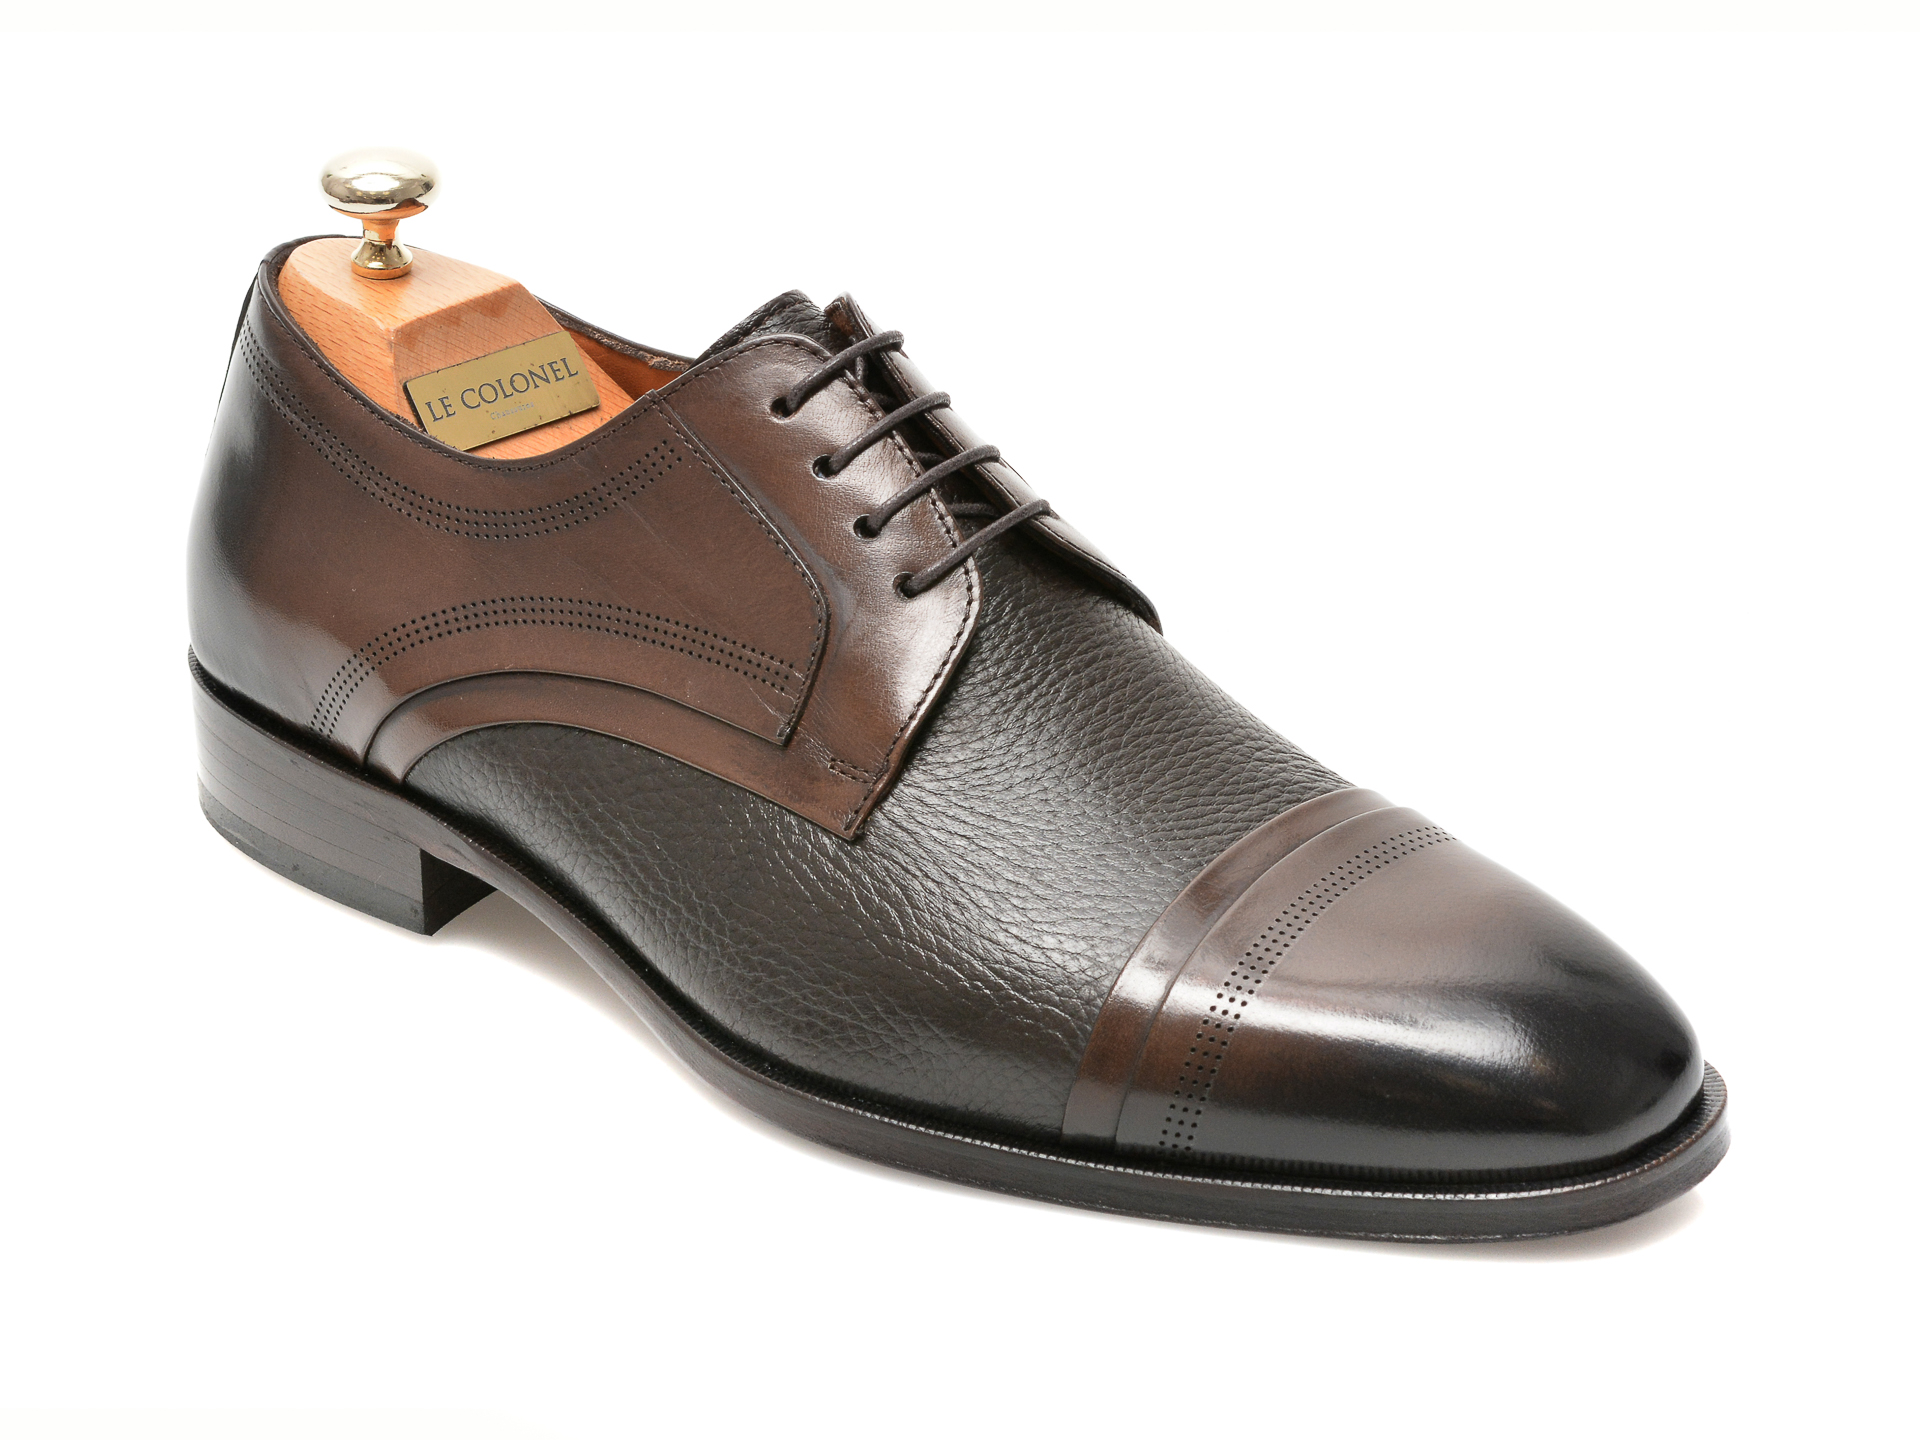 Pantofi LE COLONEL maro, 48470, din piele naturala /barbati/pantofi